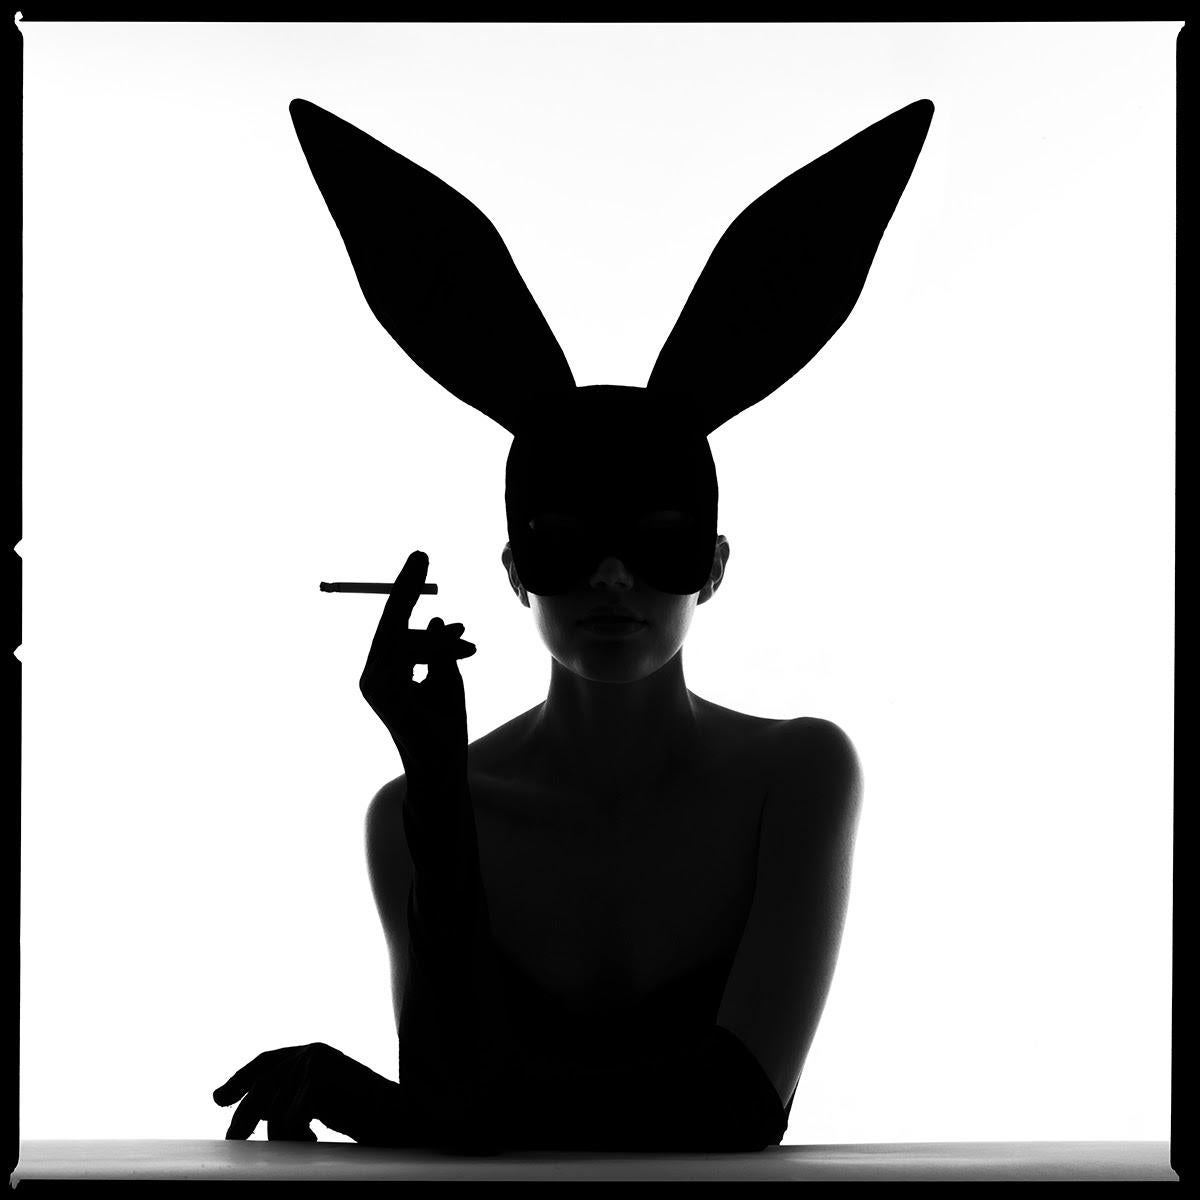 Tyler Shields - Bunny Silhouette III, Photography 2021